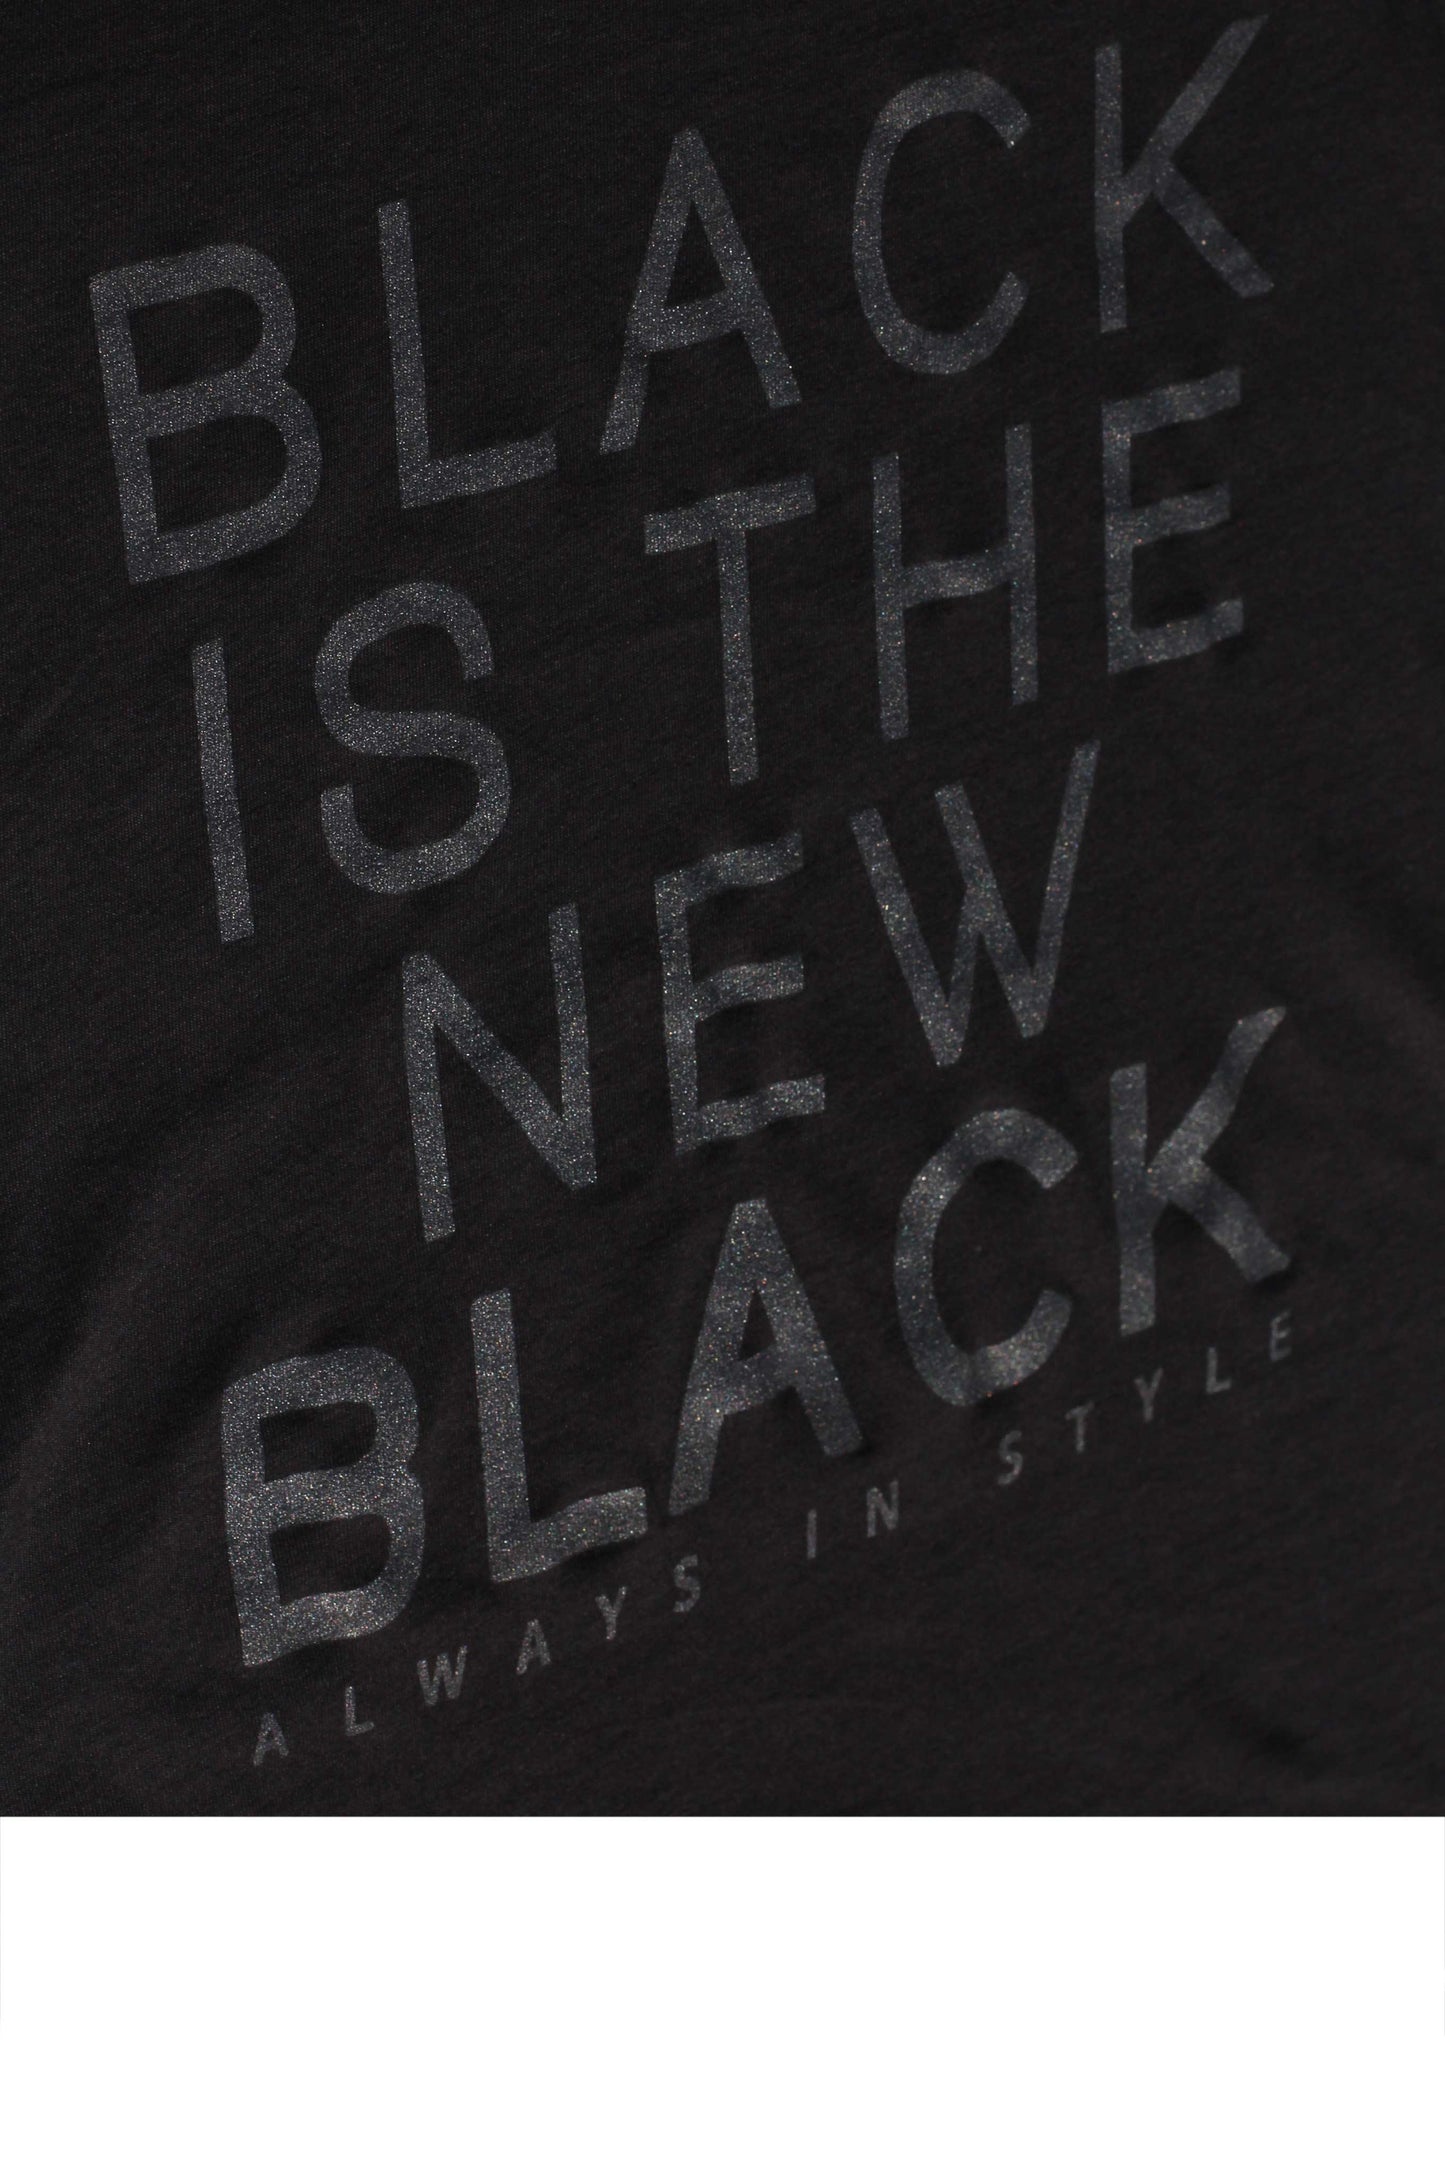 Black is the New Black Tee